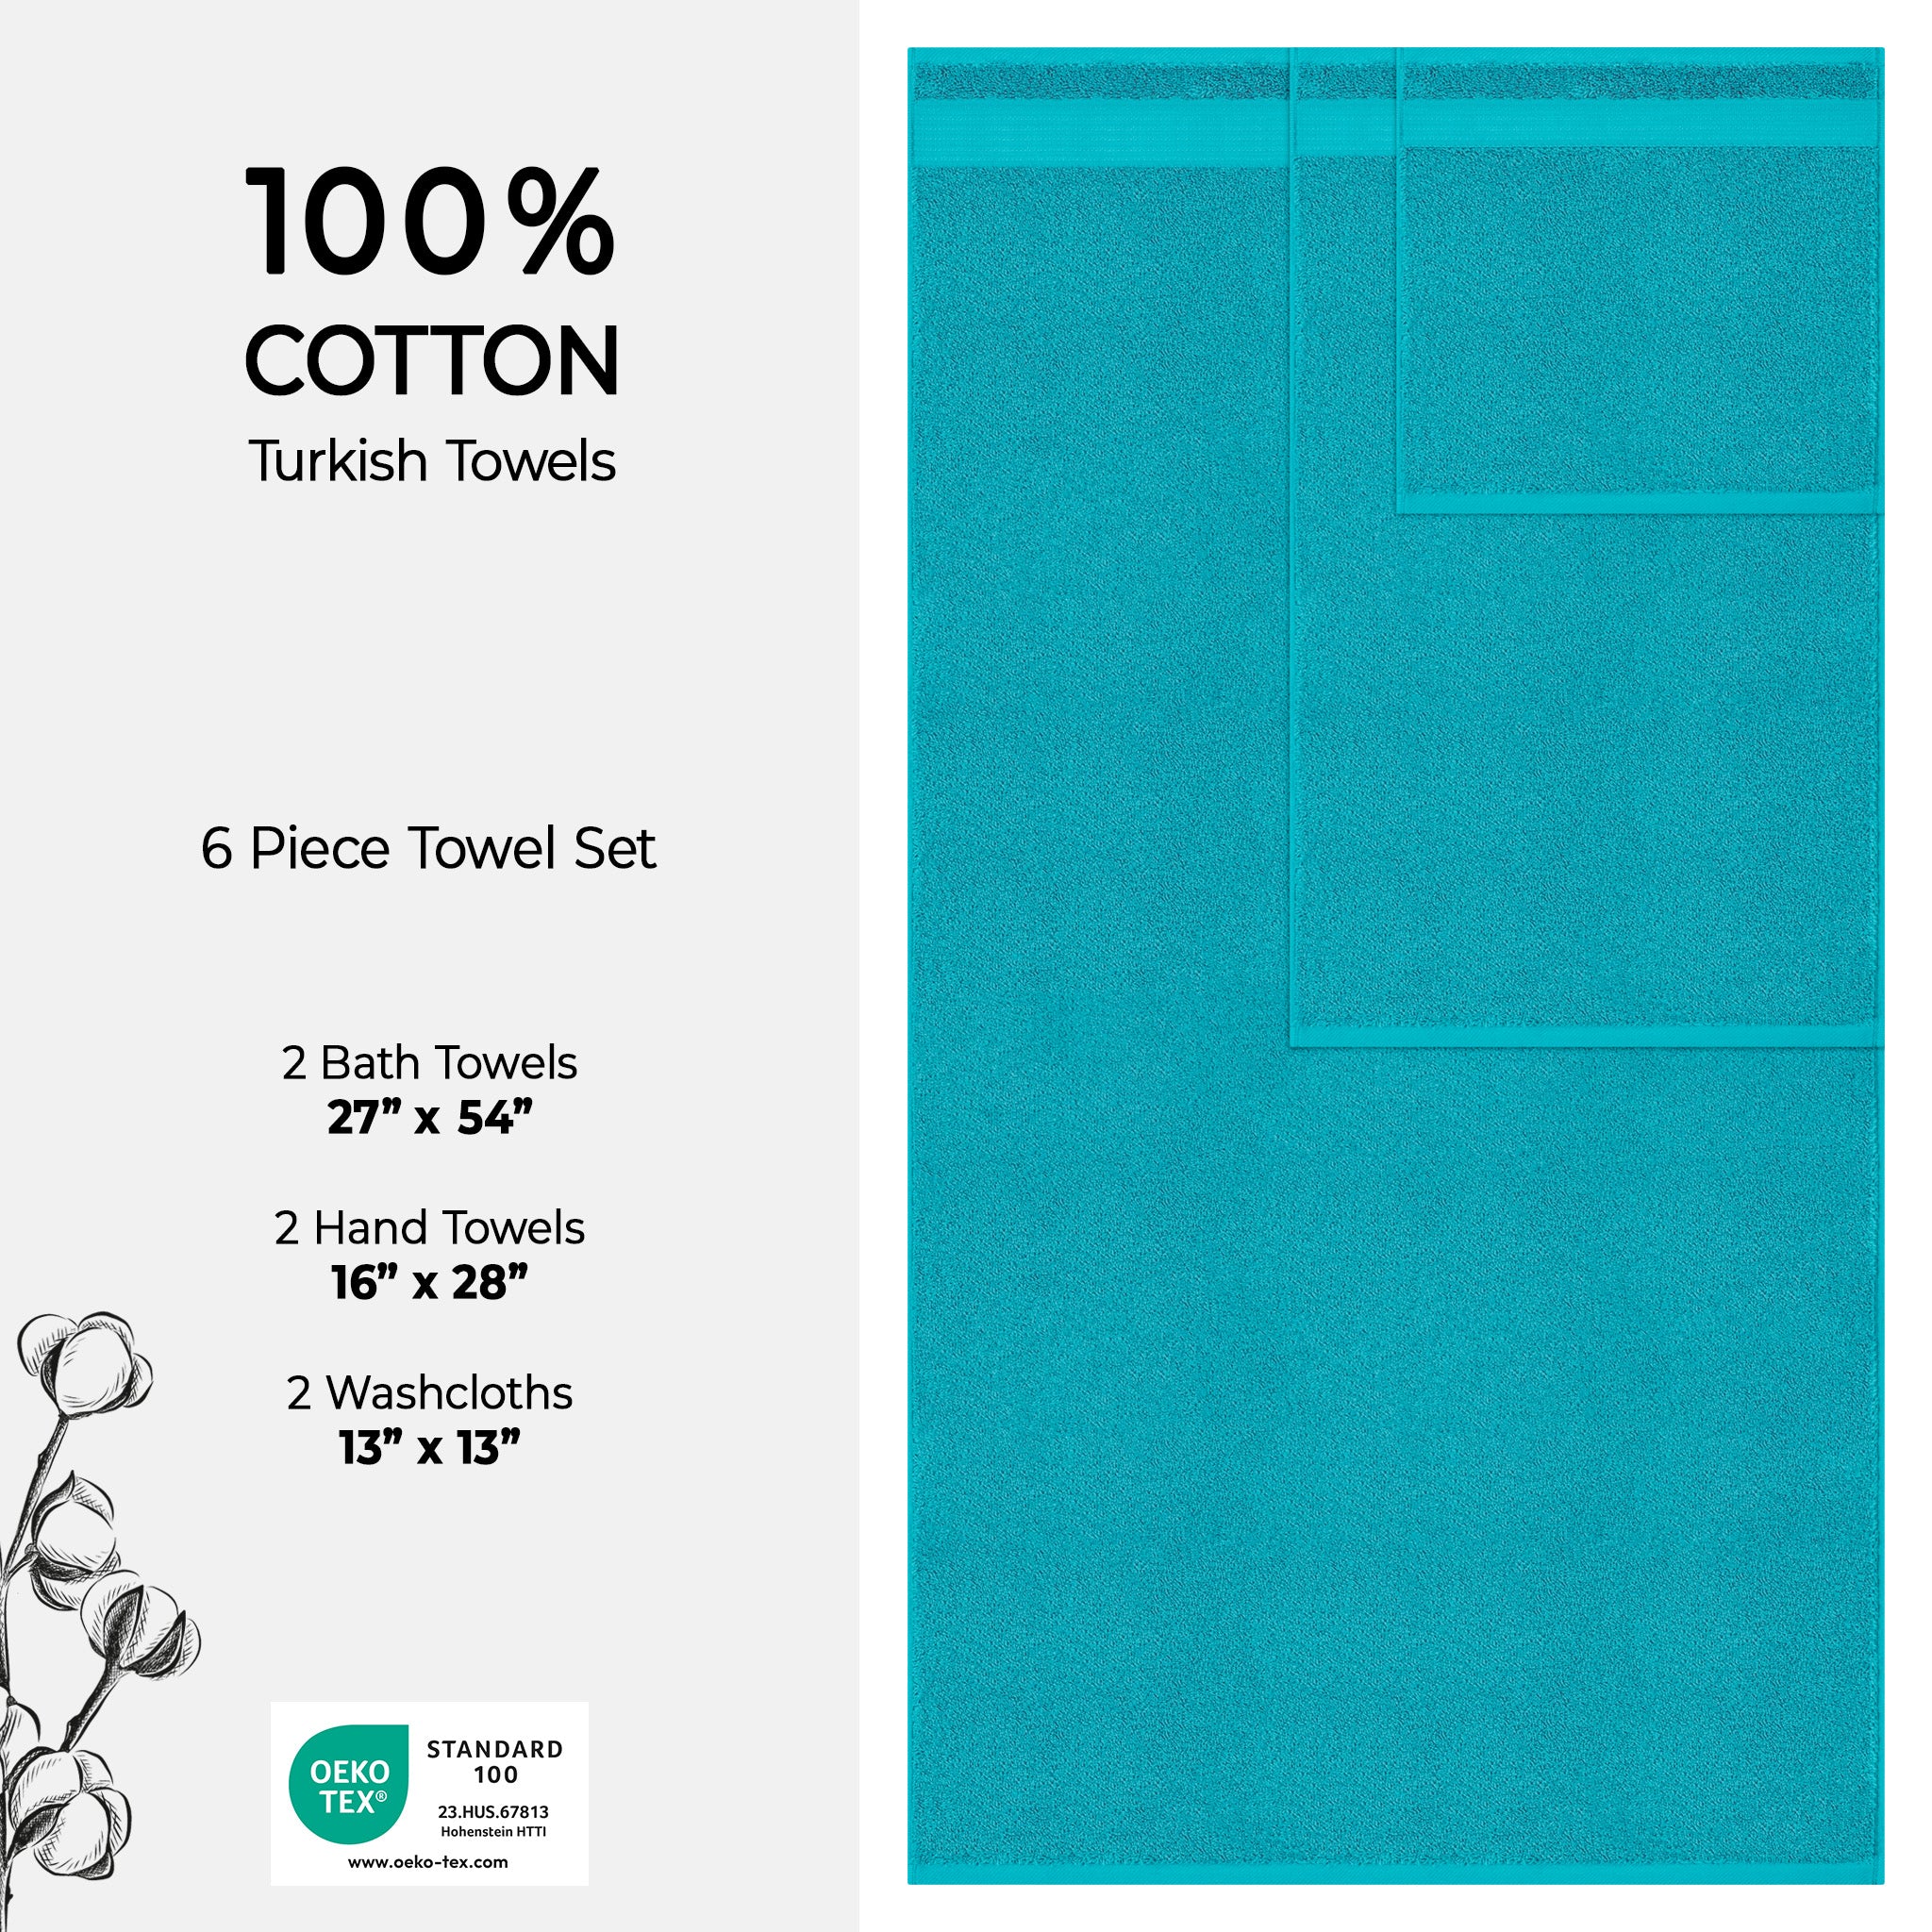 American Soft Linen Bekos 100% Cotton Turkish Towels 6 Piece Bath Towel Set -aqua-blue-04